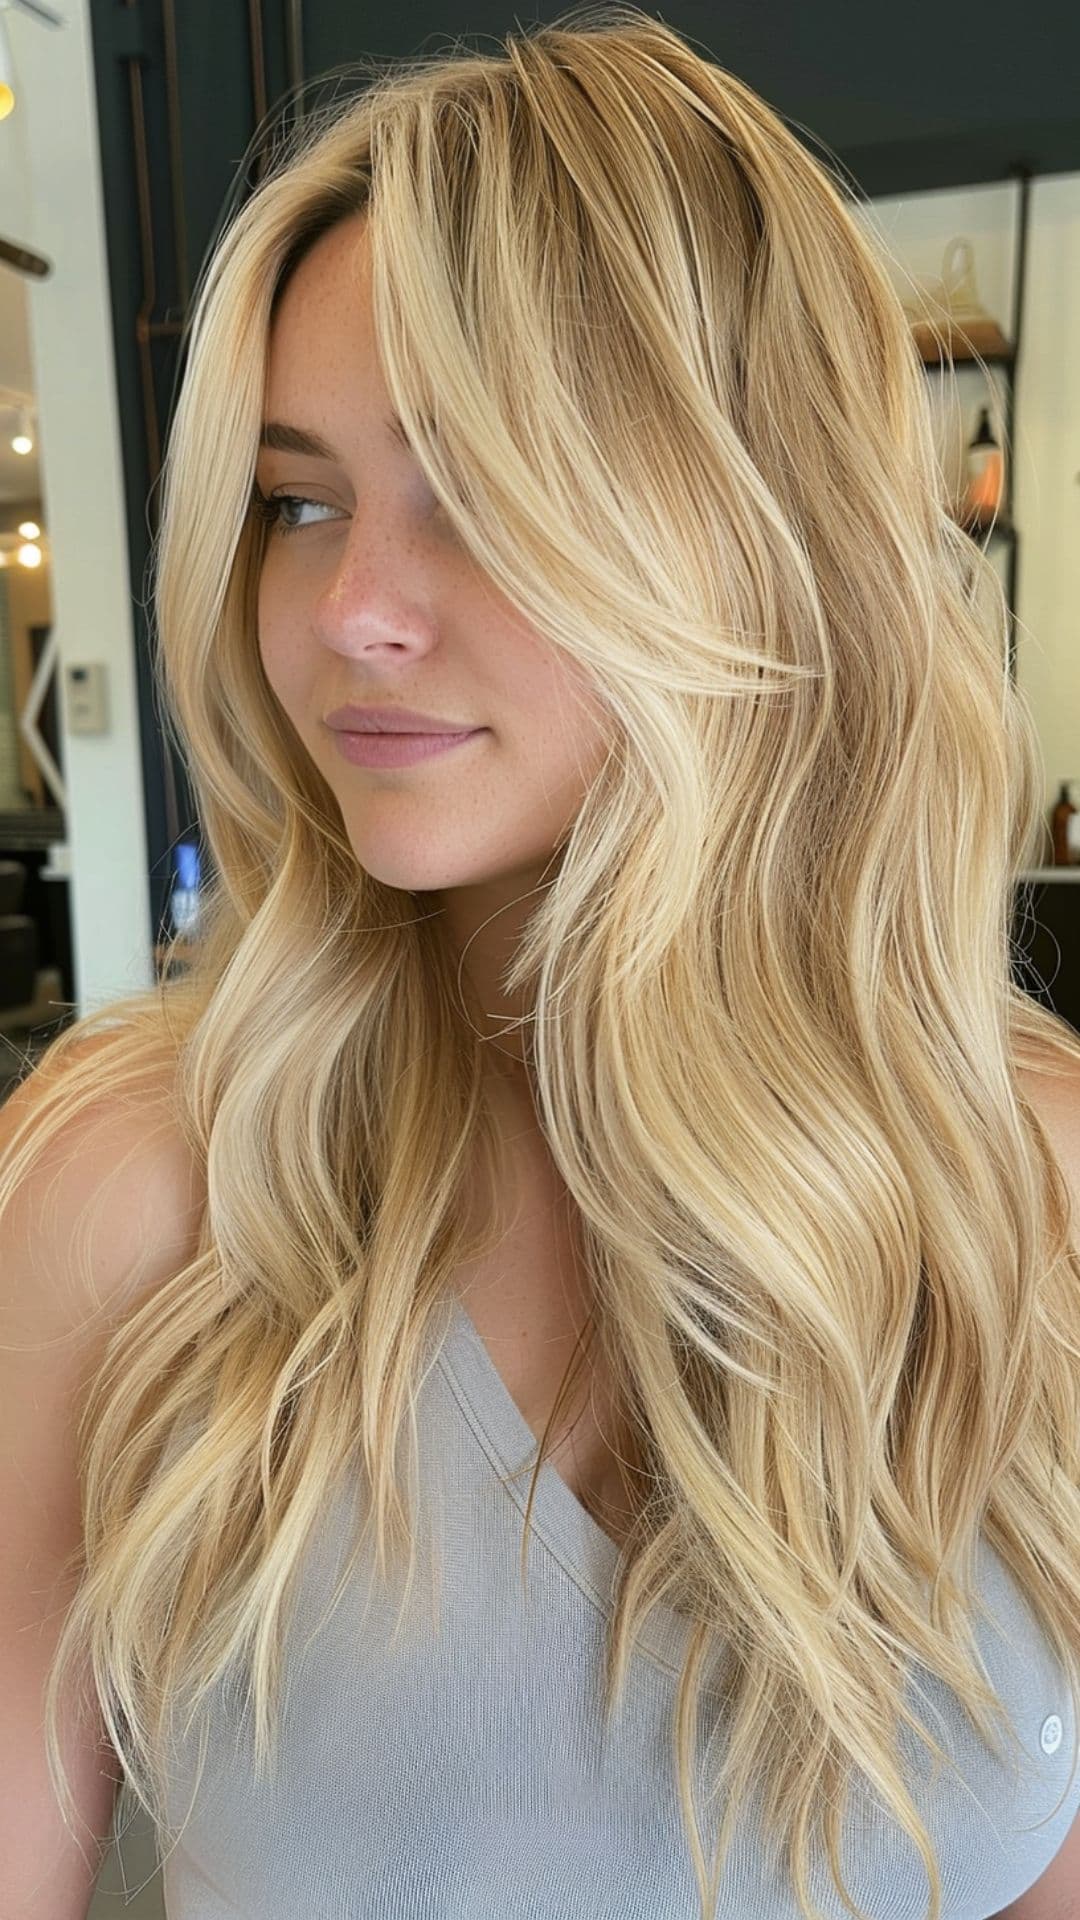 A woman modelling a golden blonde hair.